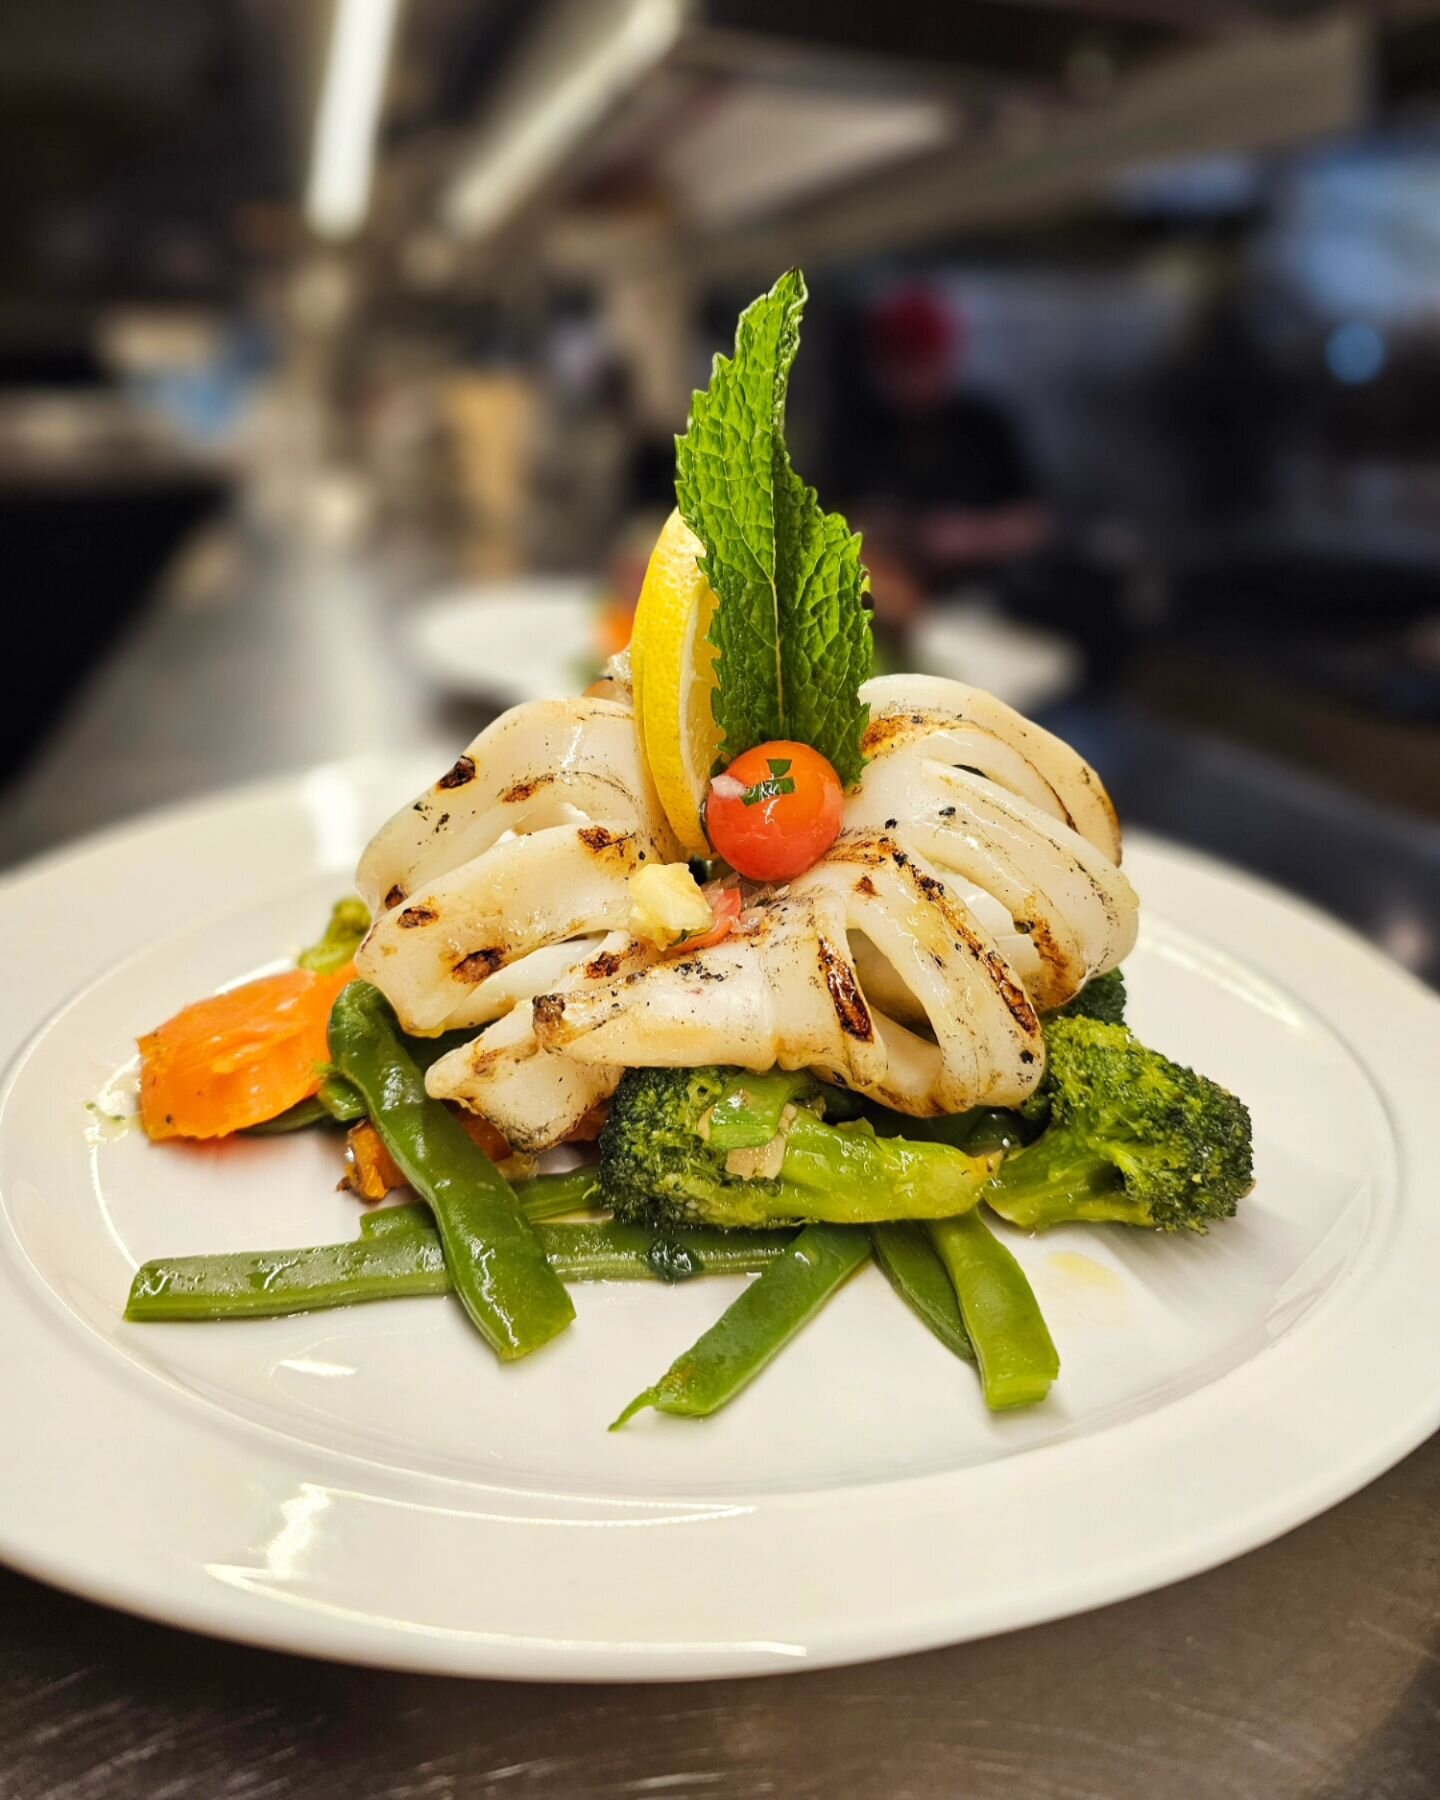 Grilled Squid at Piri Piri Restaurant, Toronto.

#restaurant #food #foodie #torontorestaurants #cravethe6ix #torontojunction #seafood #mediterraneancuisine #toronto #canada.